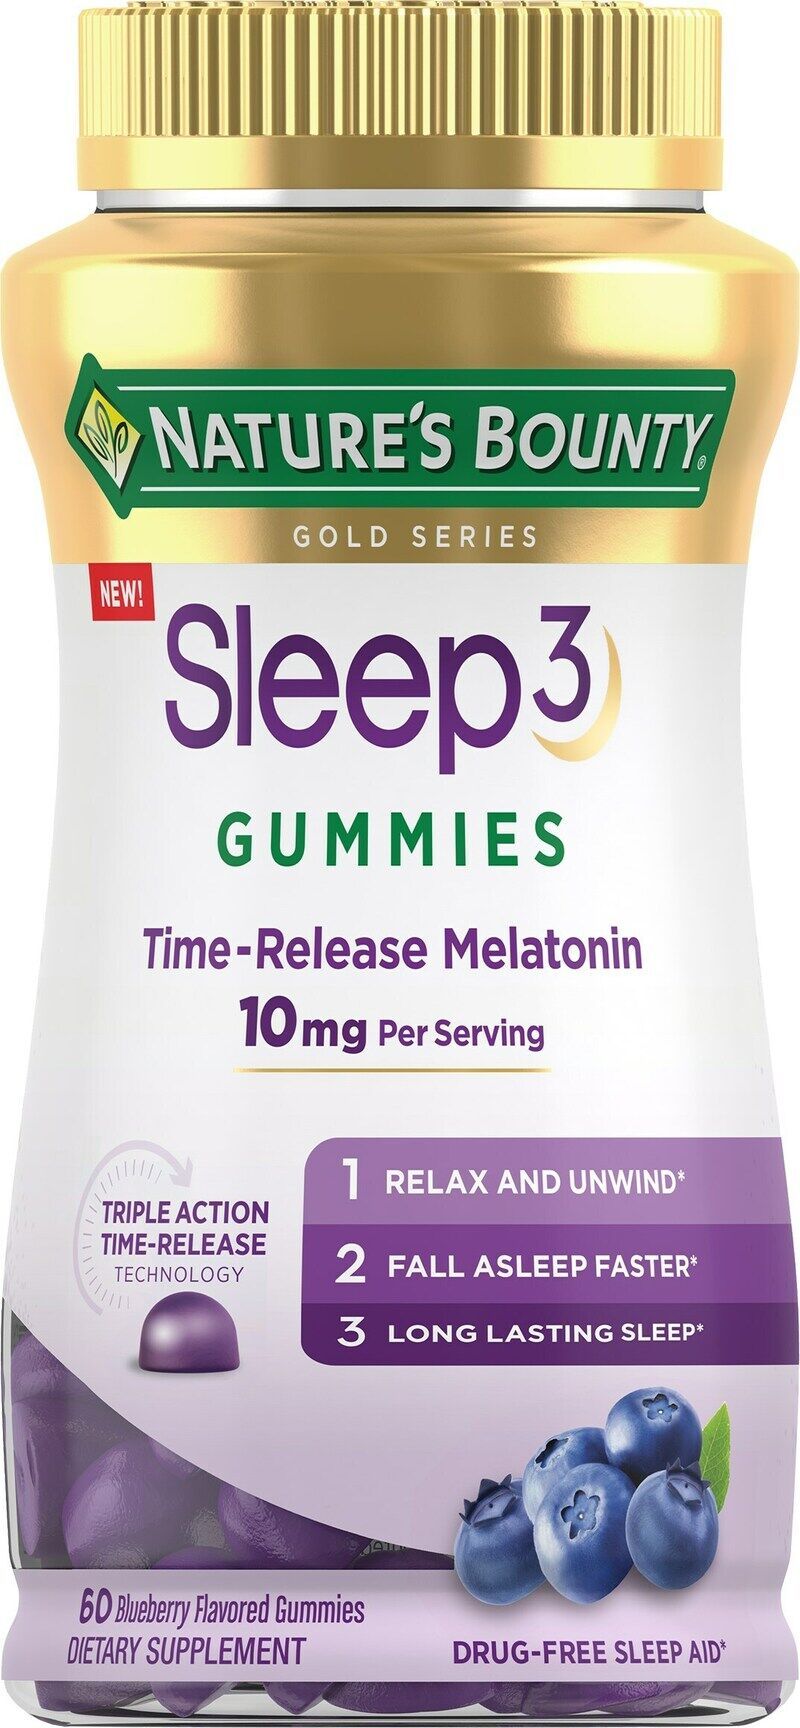 Triple-Action Sleep Gummies